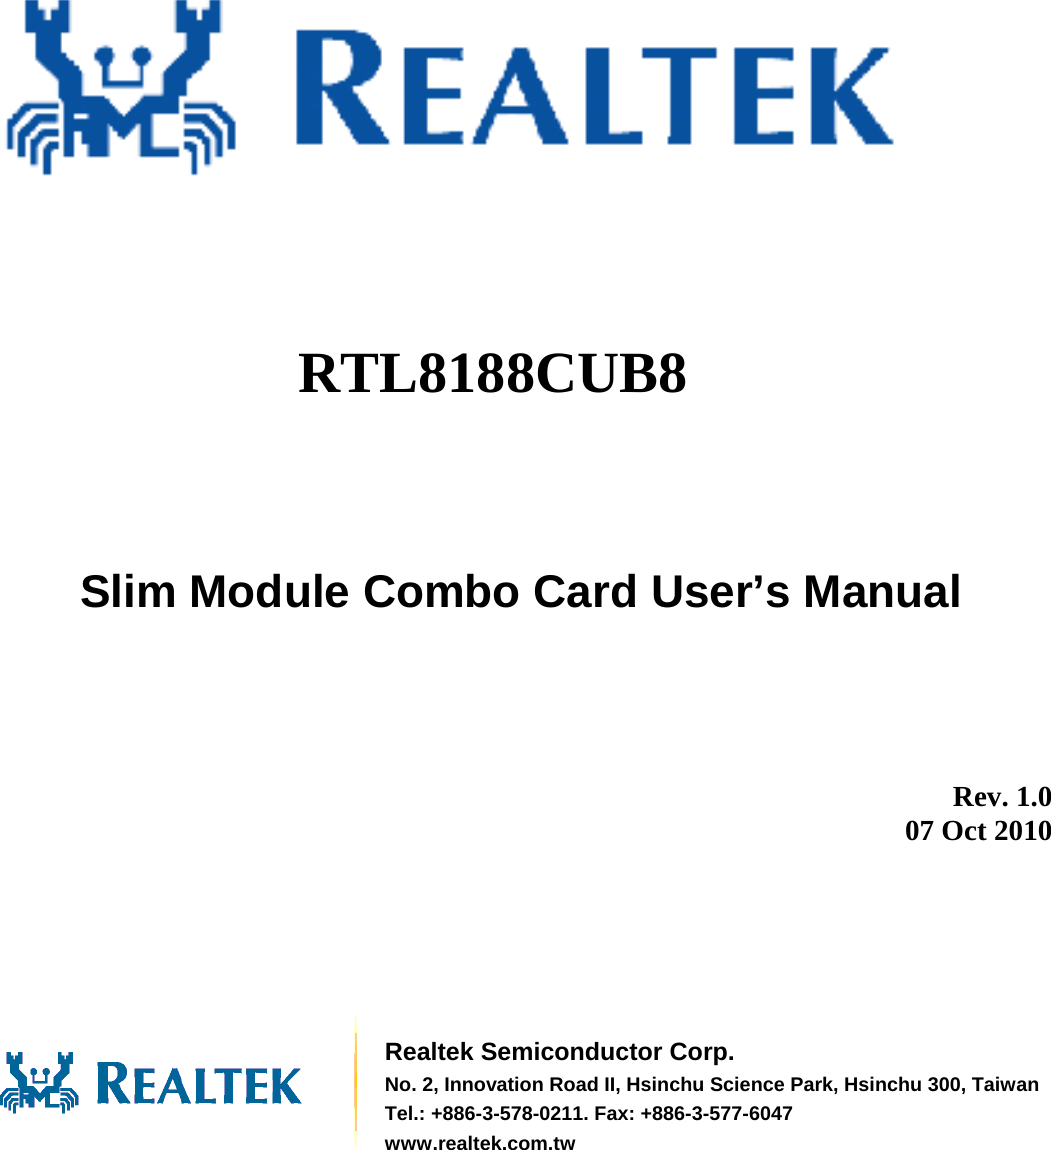               RTL8188CUB8  Slim Module Combo Card User’s Manual          Rev. 1.0 07 Oct 2010        Realtek Semiconductor Corp. No. 2, Innovation Road II, Hsinchu Science Park, Hsinchu 300, TaiwanTel.: +886-3-578-0211. Fax: +886-3-577-6047 www.realtek.com.tw 